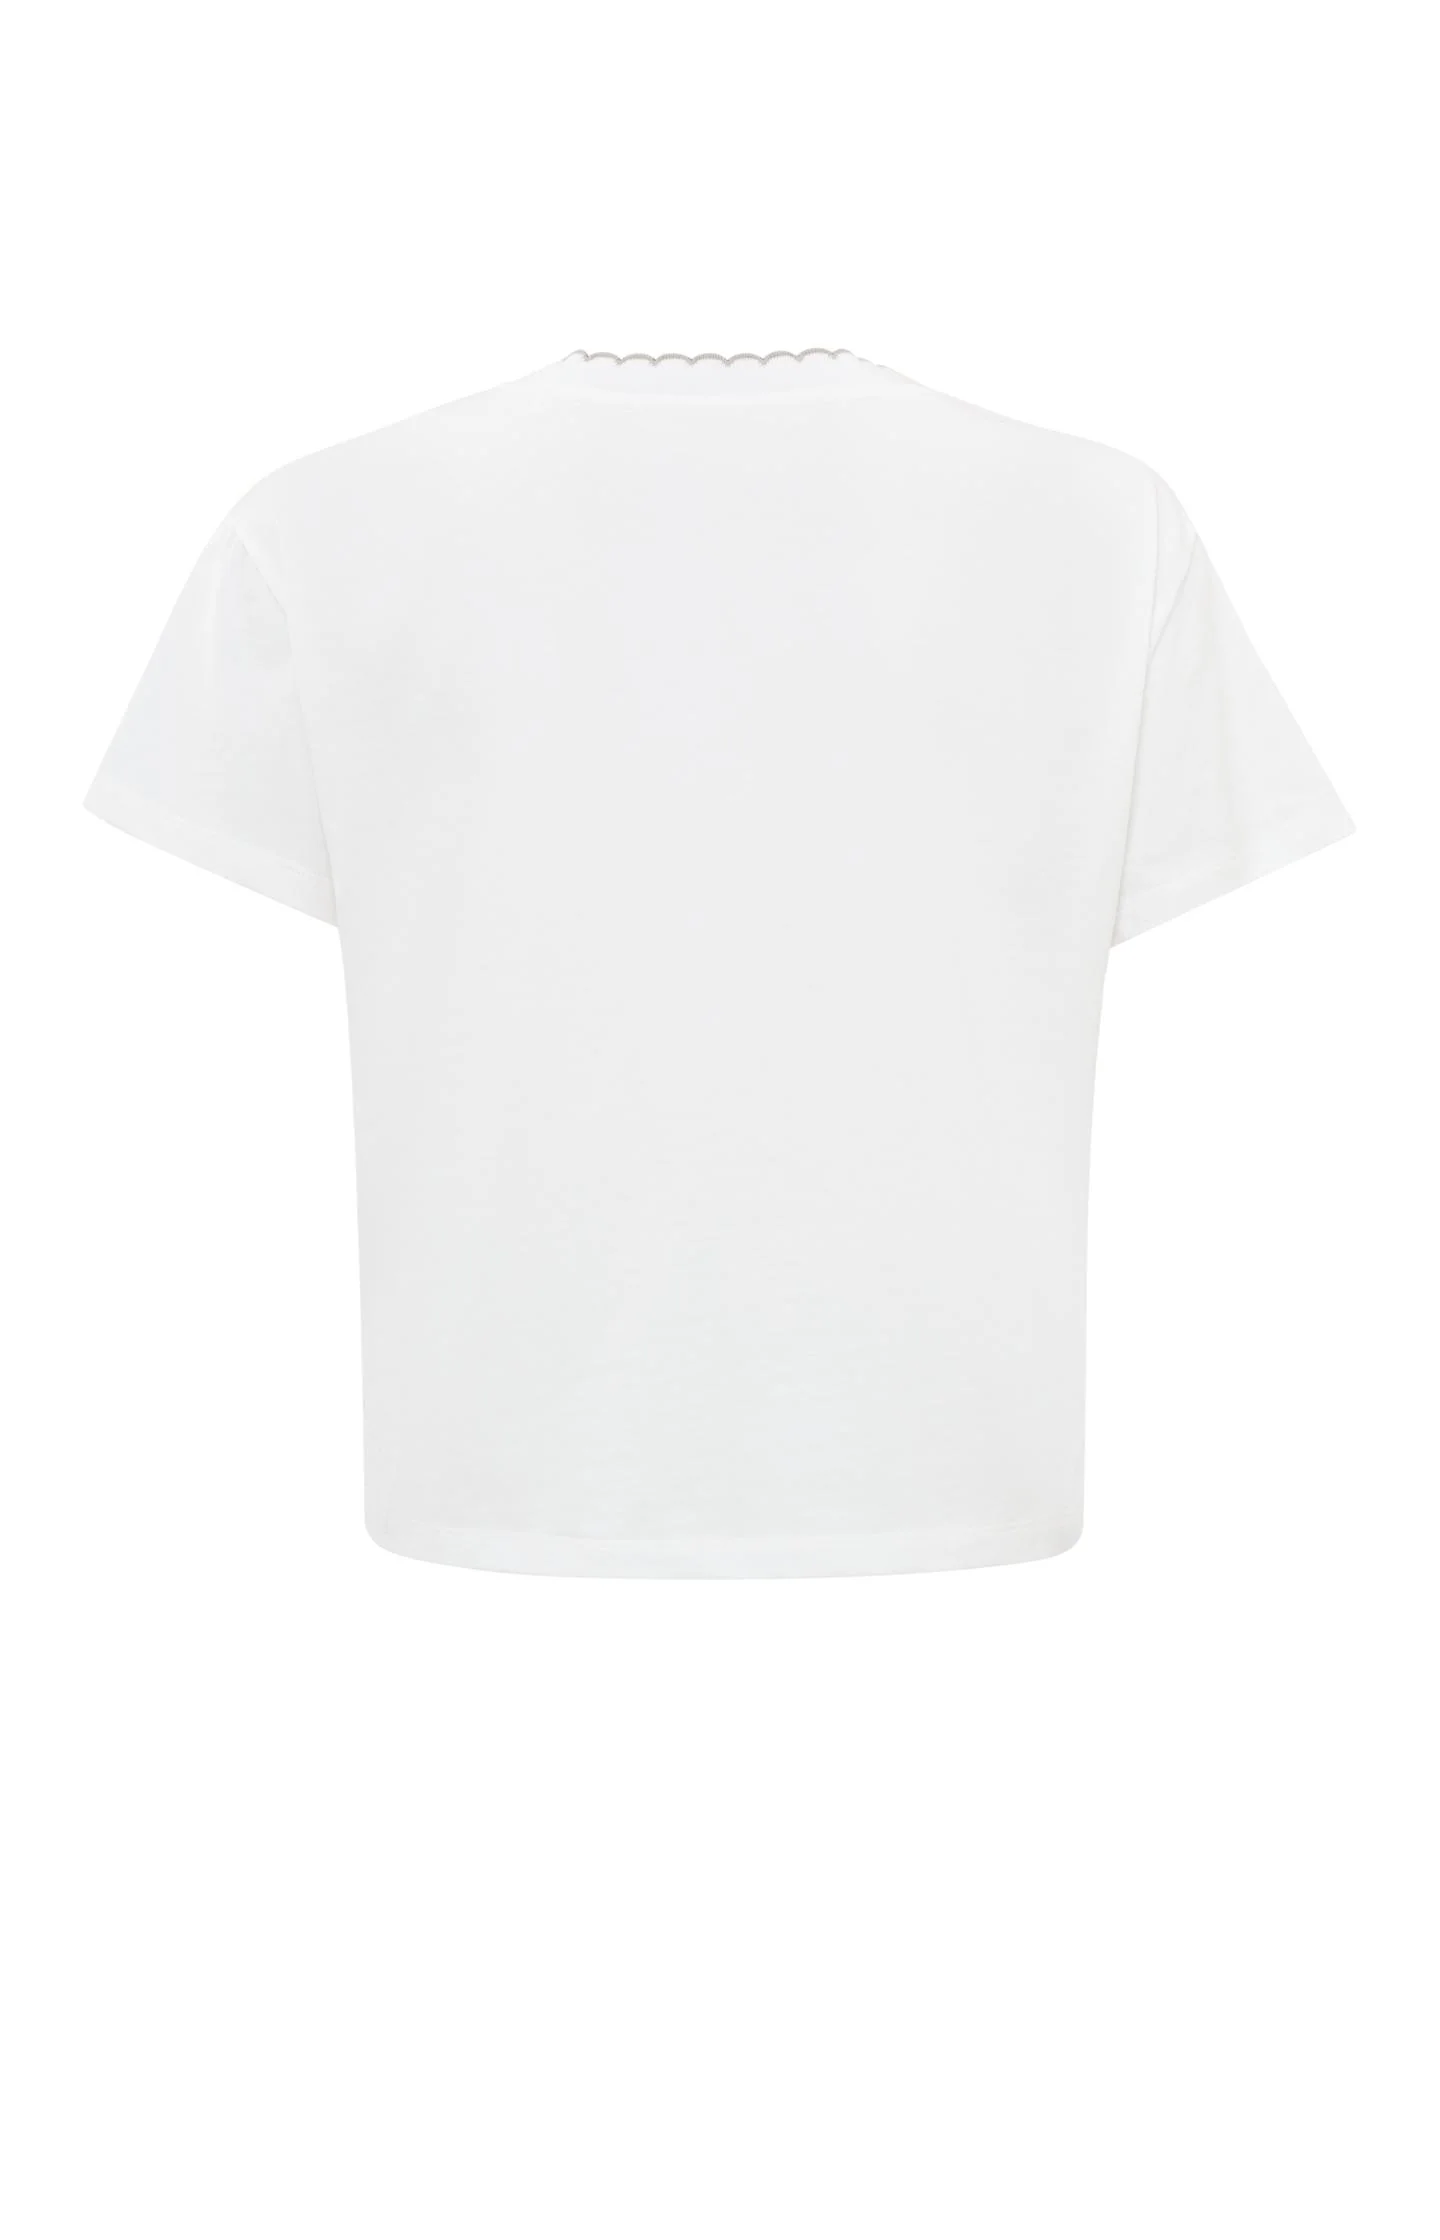 Yaya Rib Neckline Tee - Pure White Clothing - Tops - Shirts - SS Knits by Yaya | Grace the Boutique